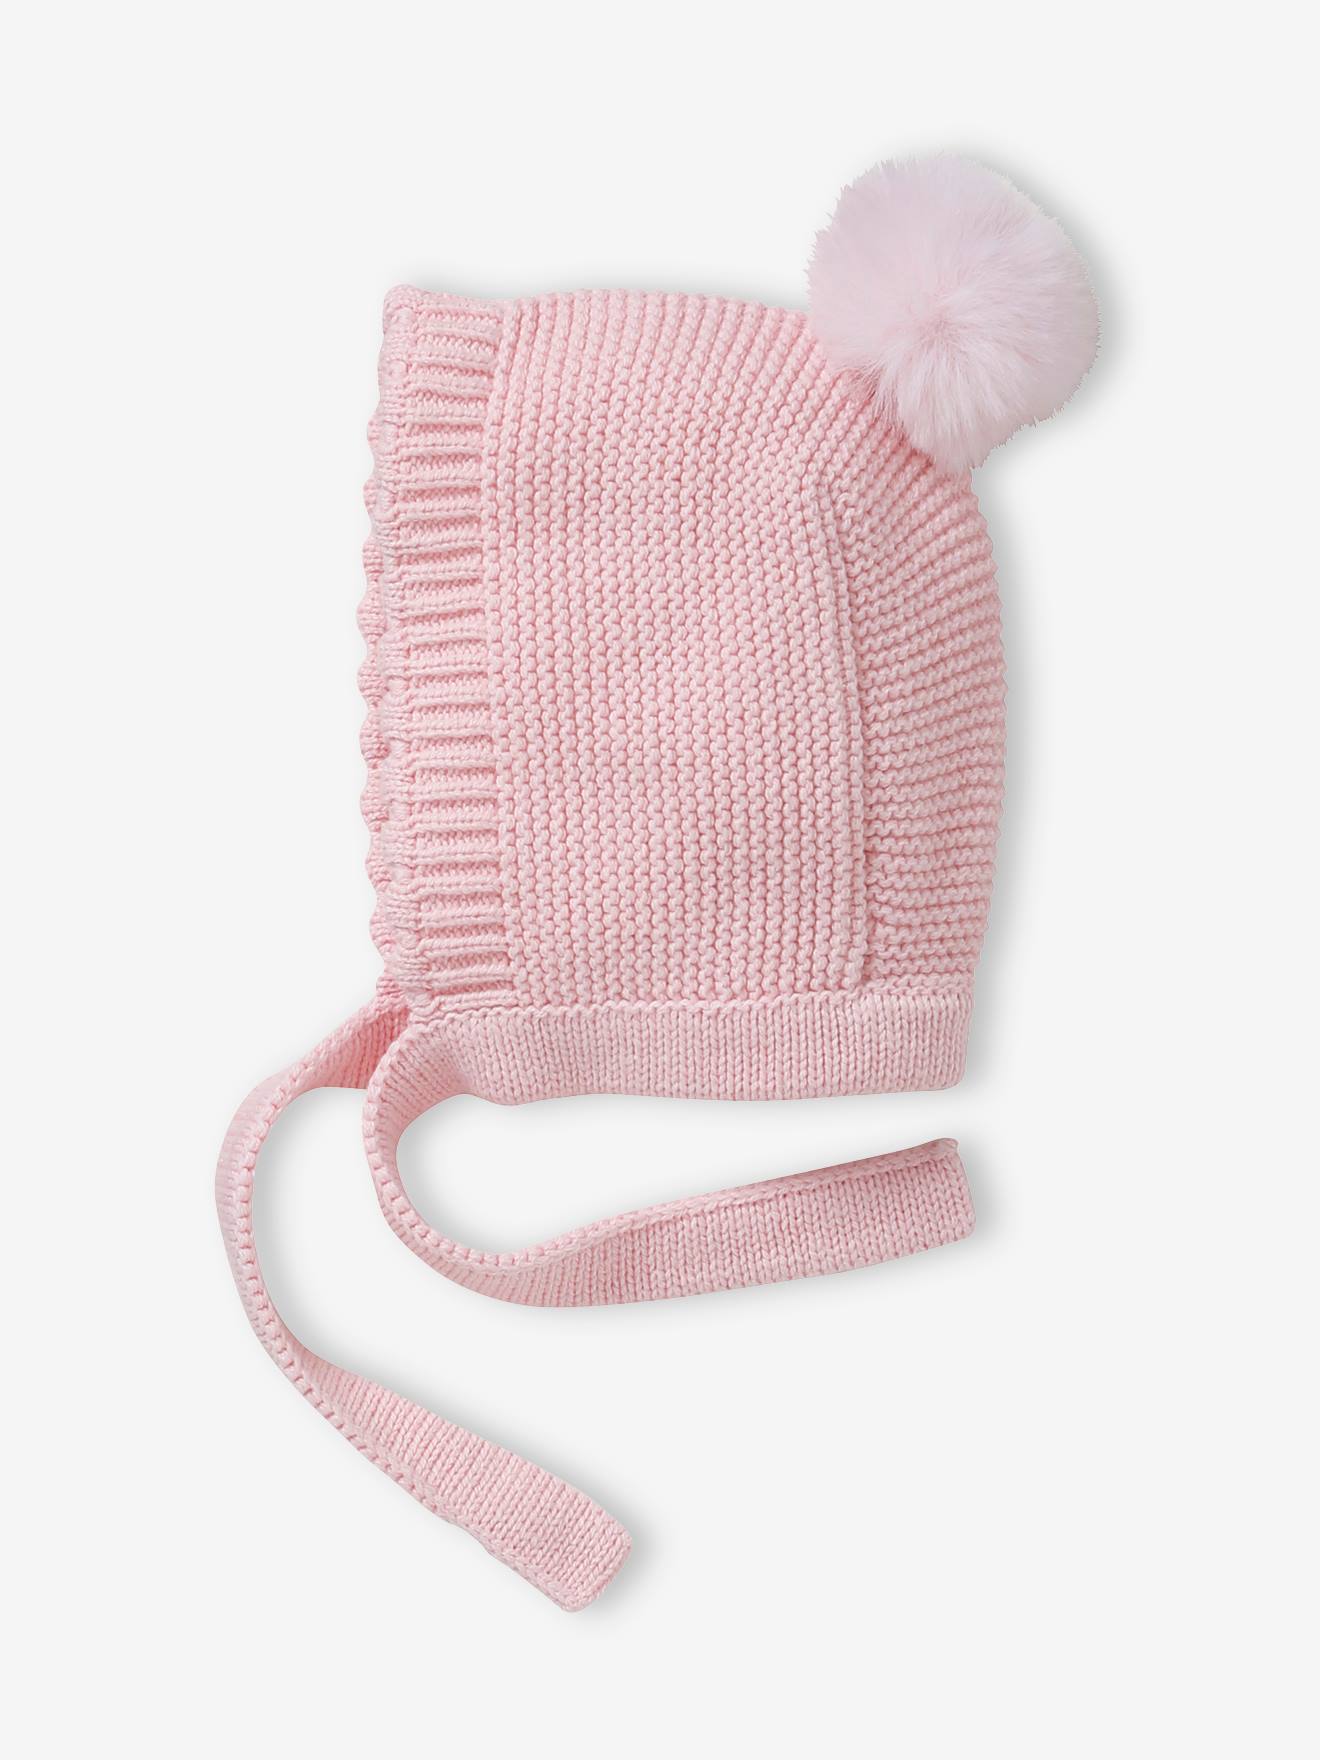 Winter Luxury Cap for Babies & Toddlers Infant Hat 6-12 Months Blush Pink Surhilo Ica Baby Alpaca Knit Bonnet 